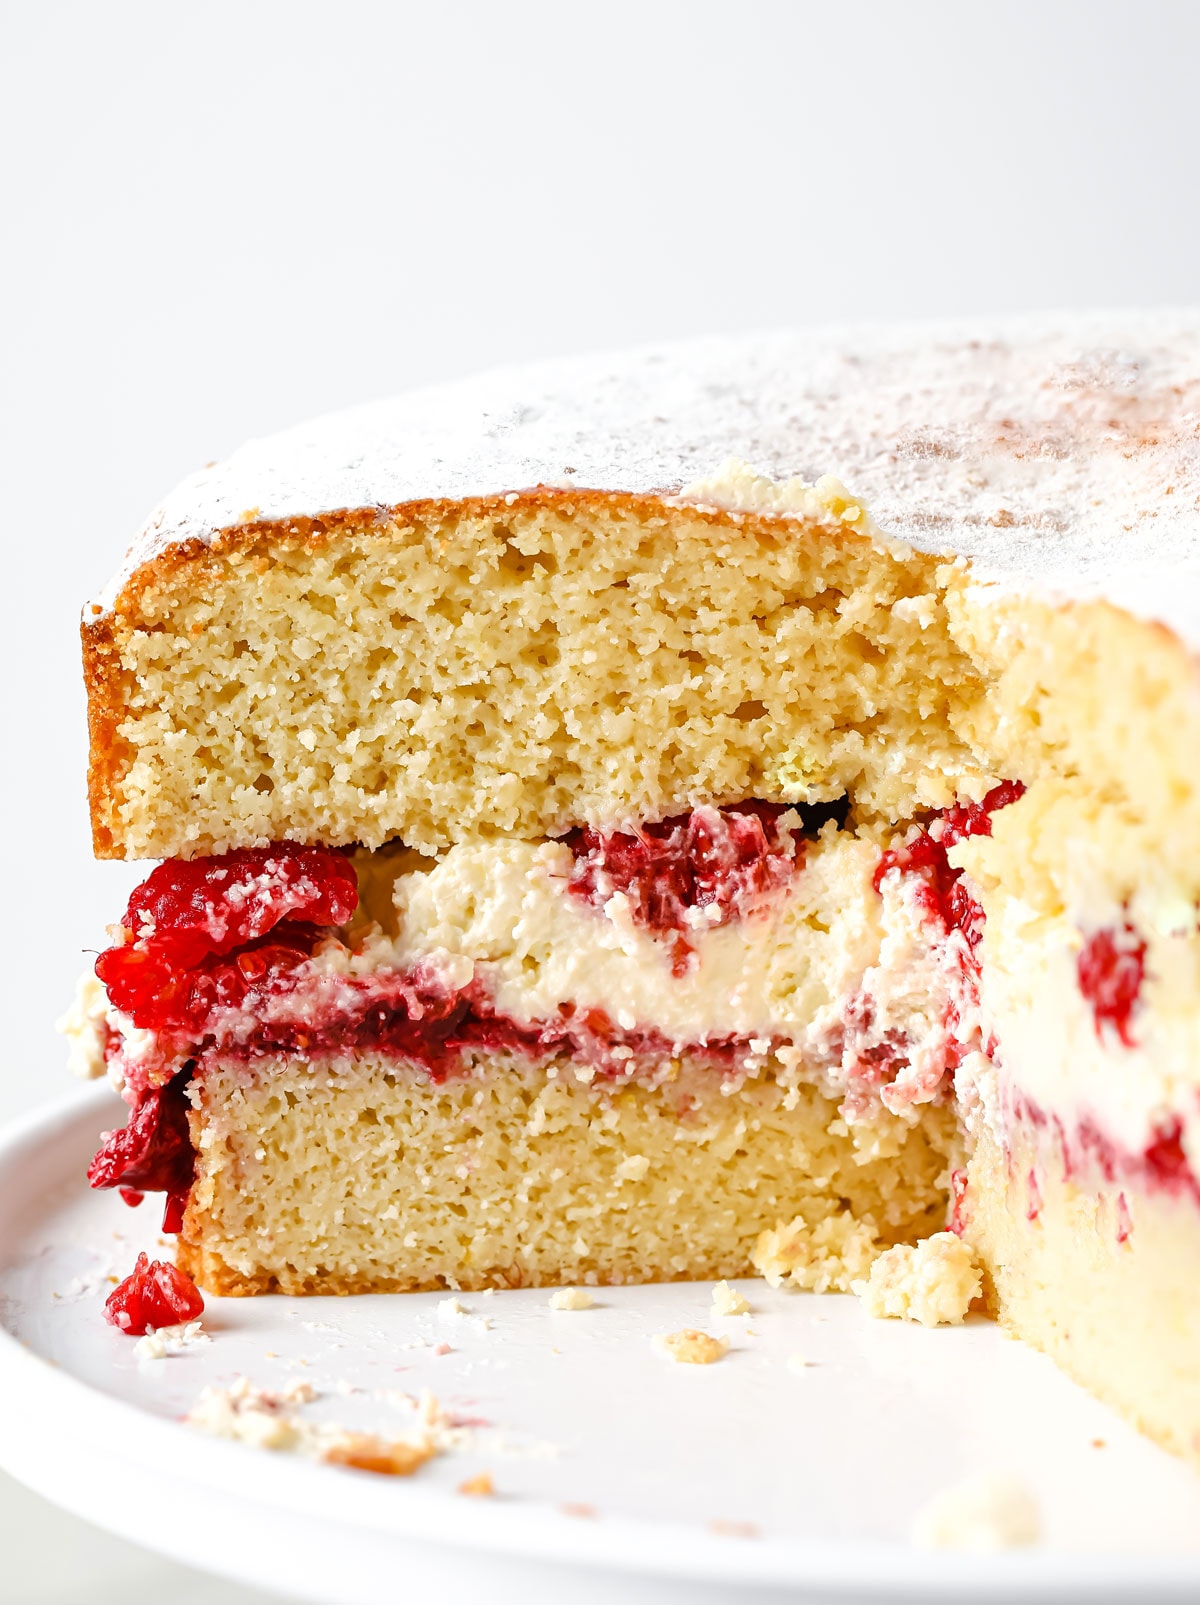 a sliced open almond flour sponge cake filled with raspberry jam, whipped cream and fresh raspberries